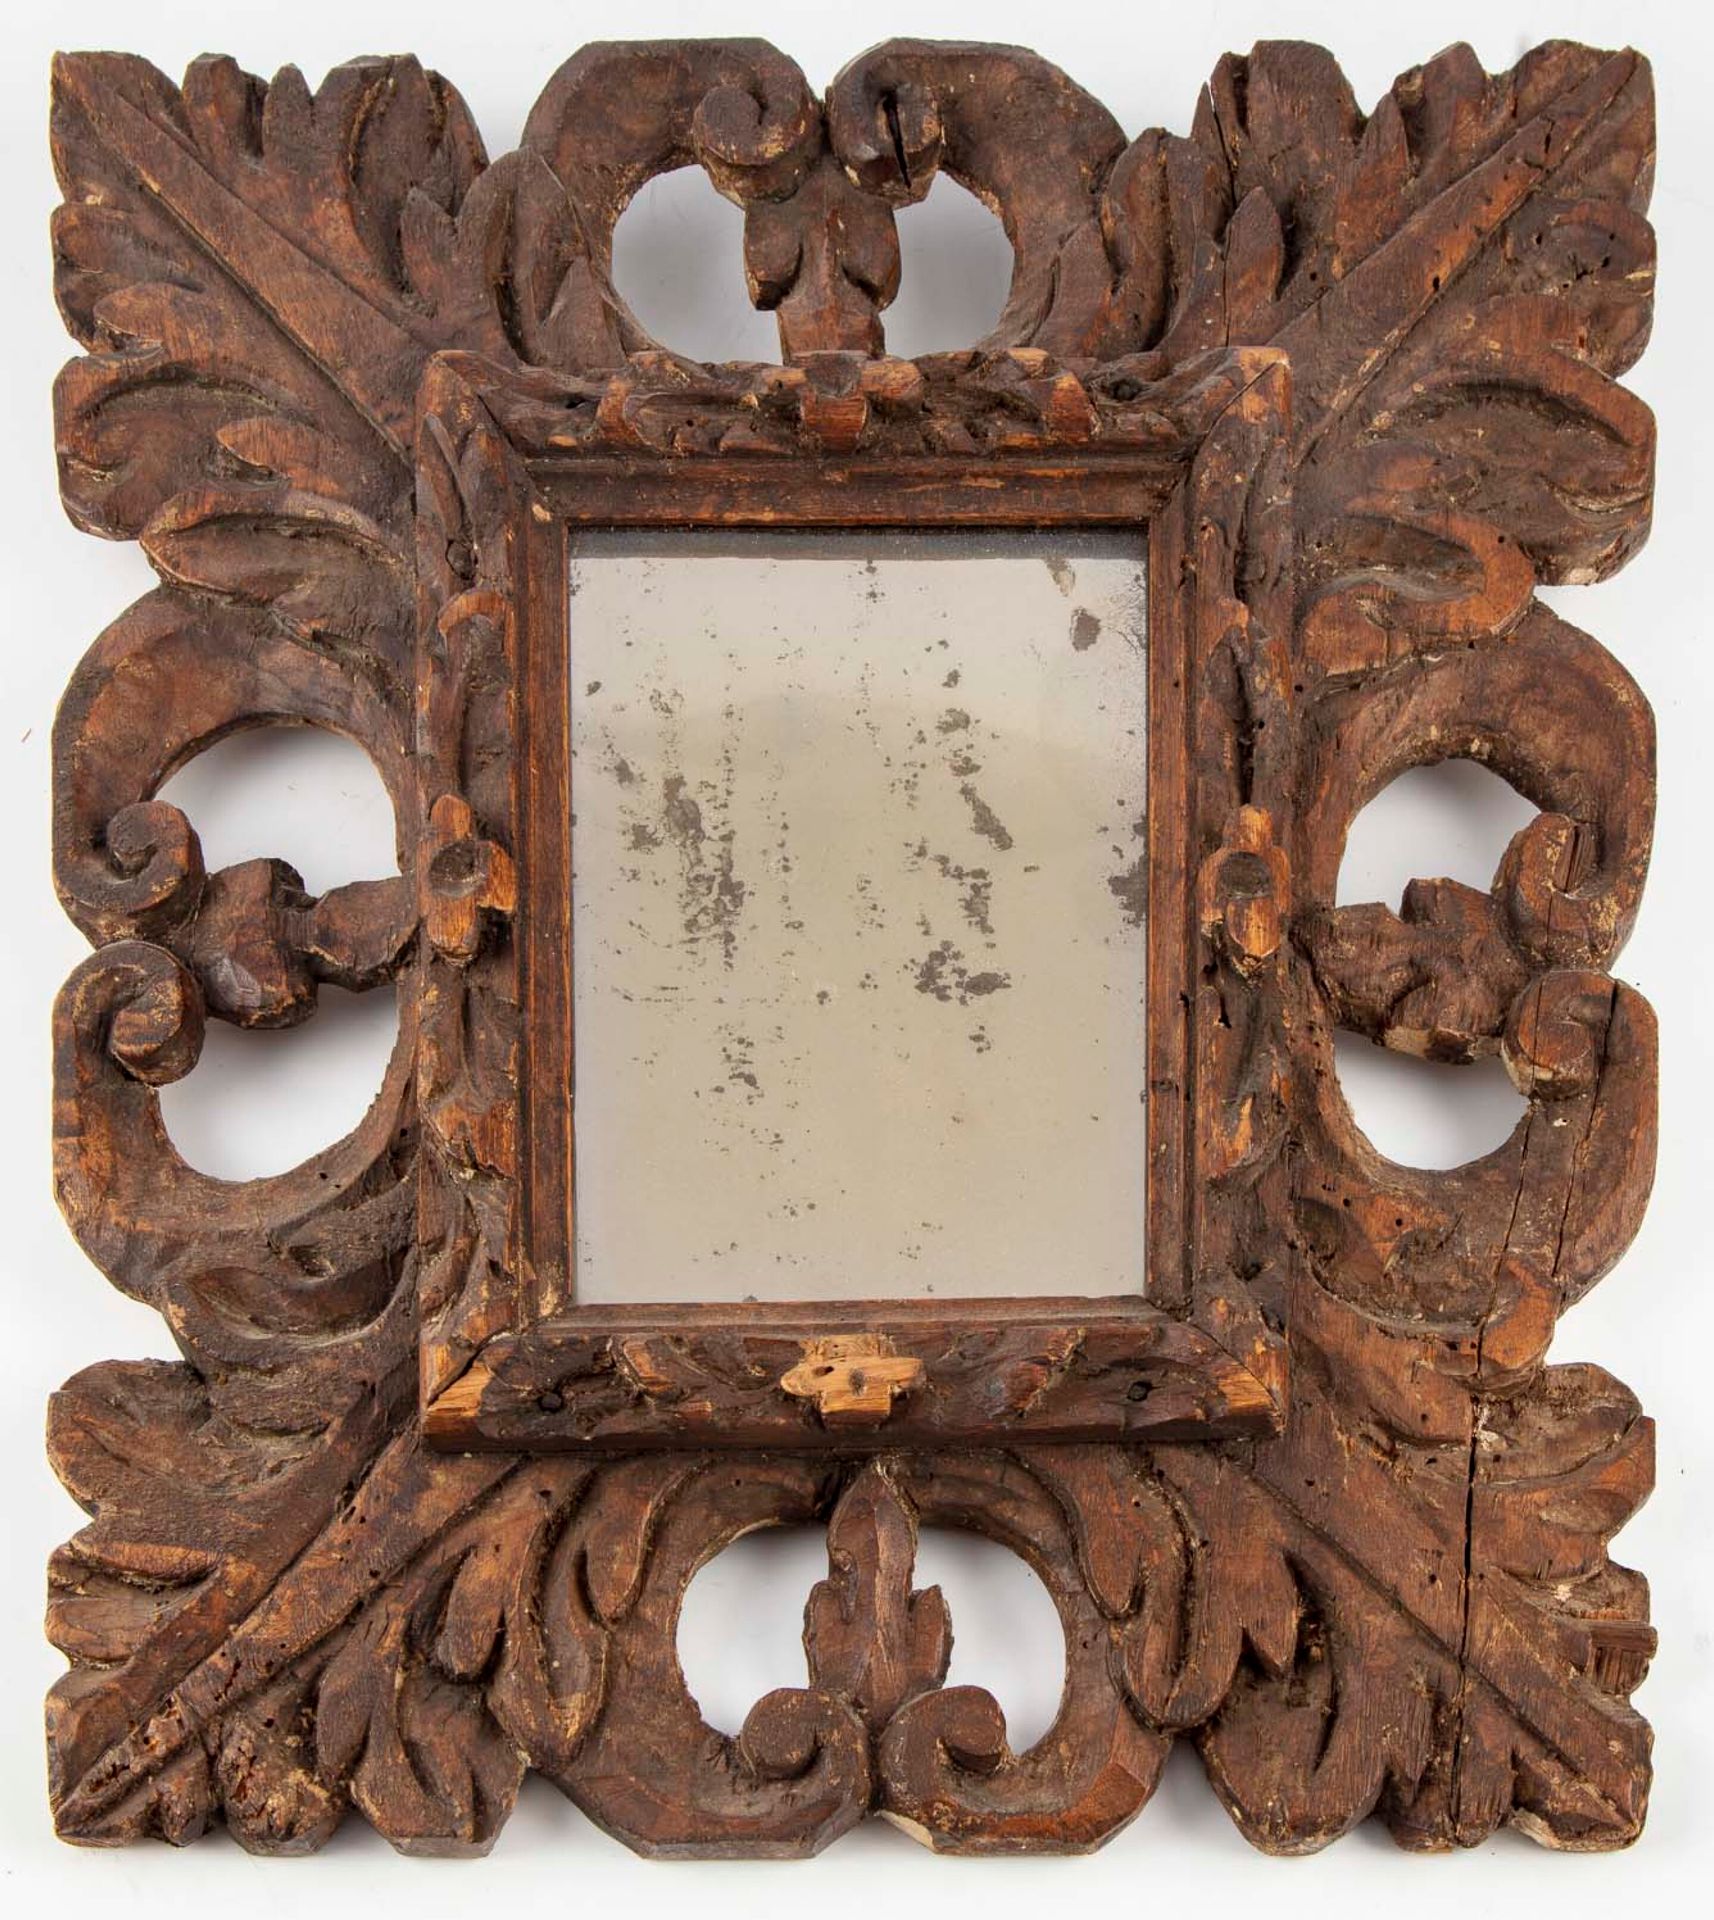 Null 饰有刺桐叶的小橡木镜子

18世纪

水星镜

28 x 31 cm